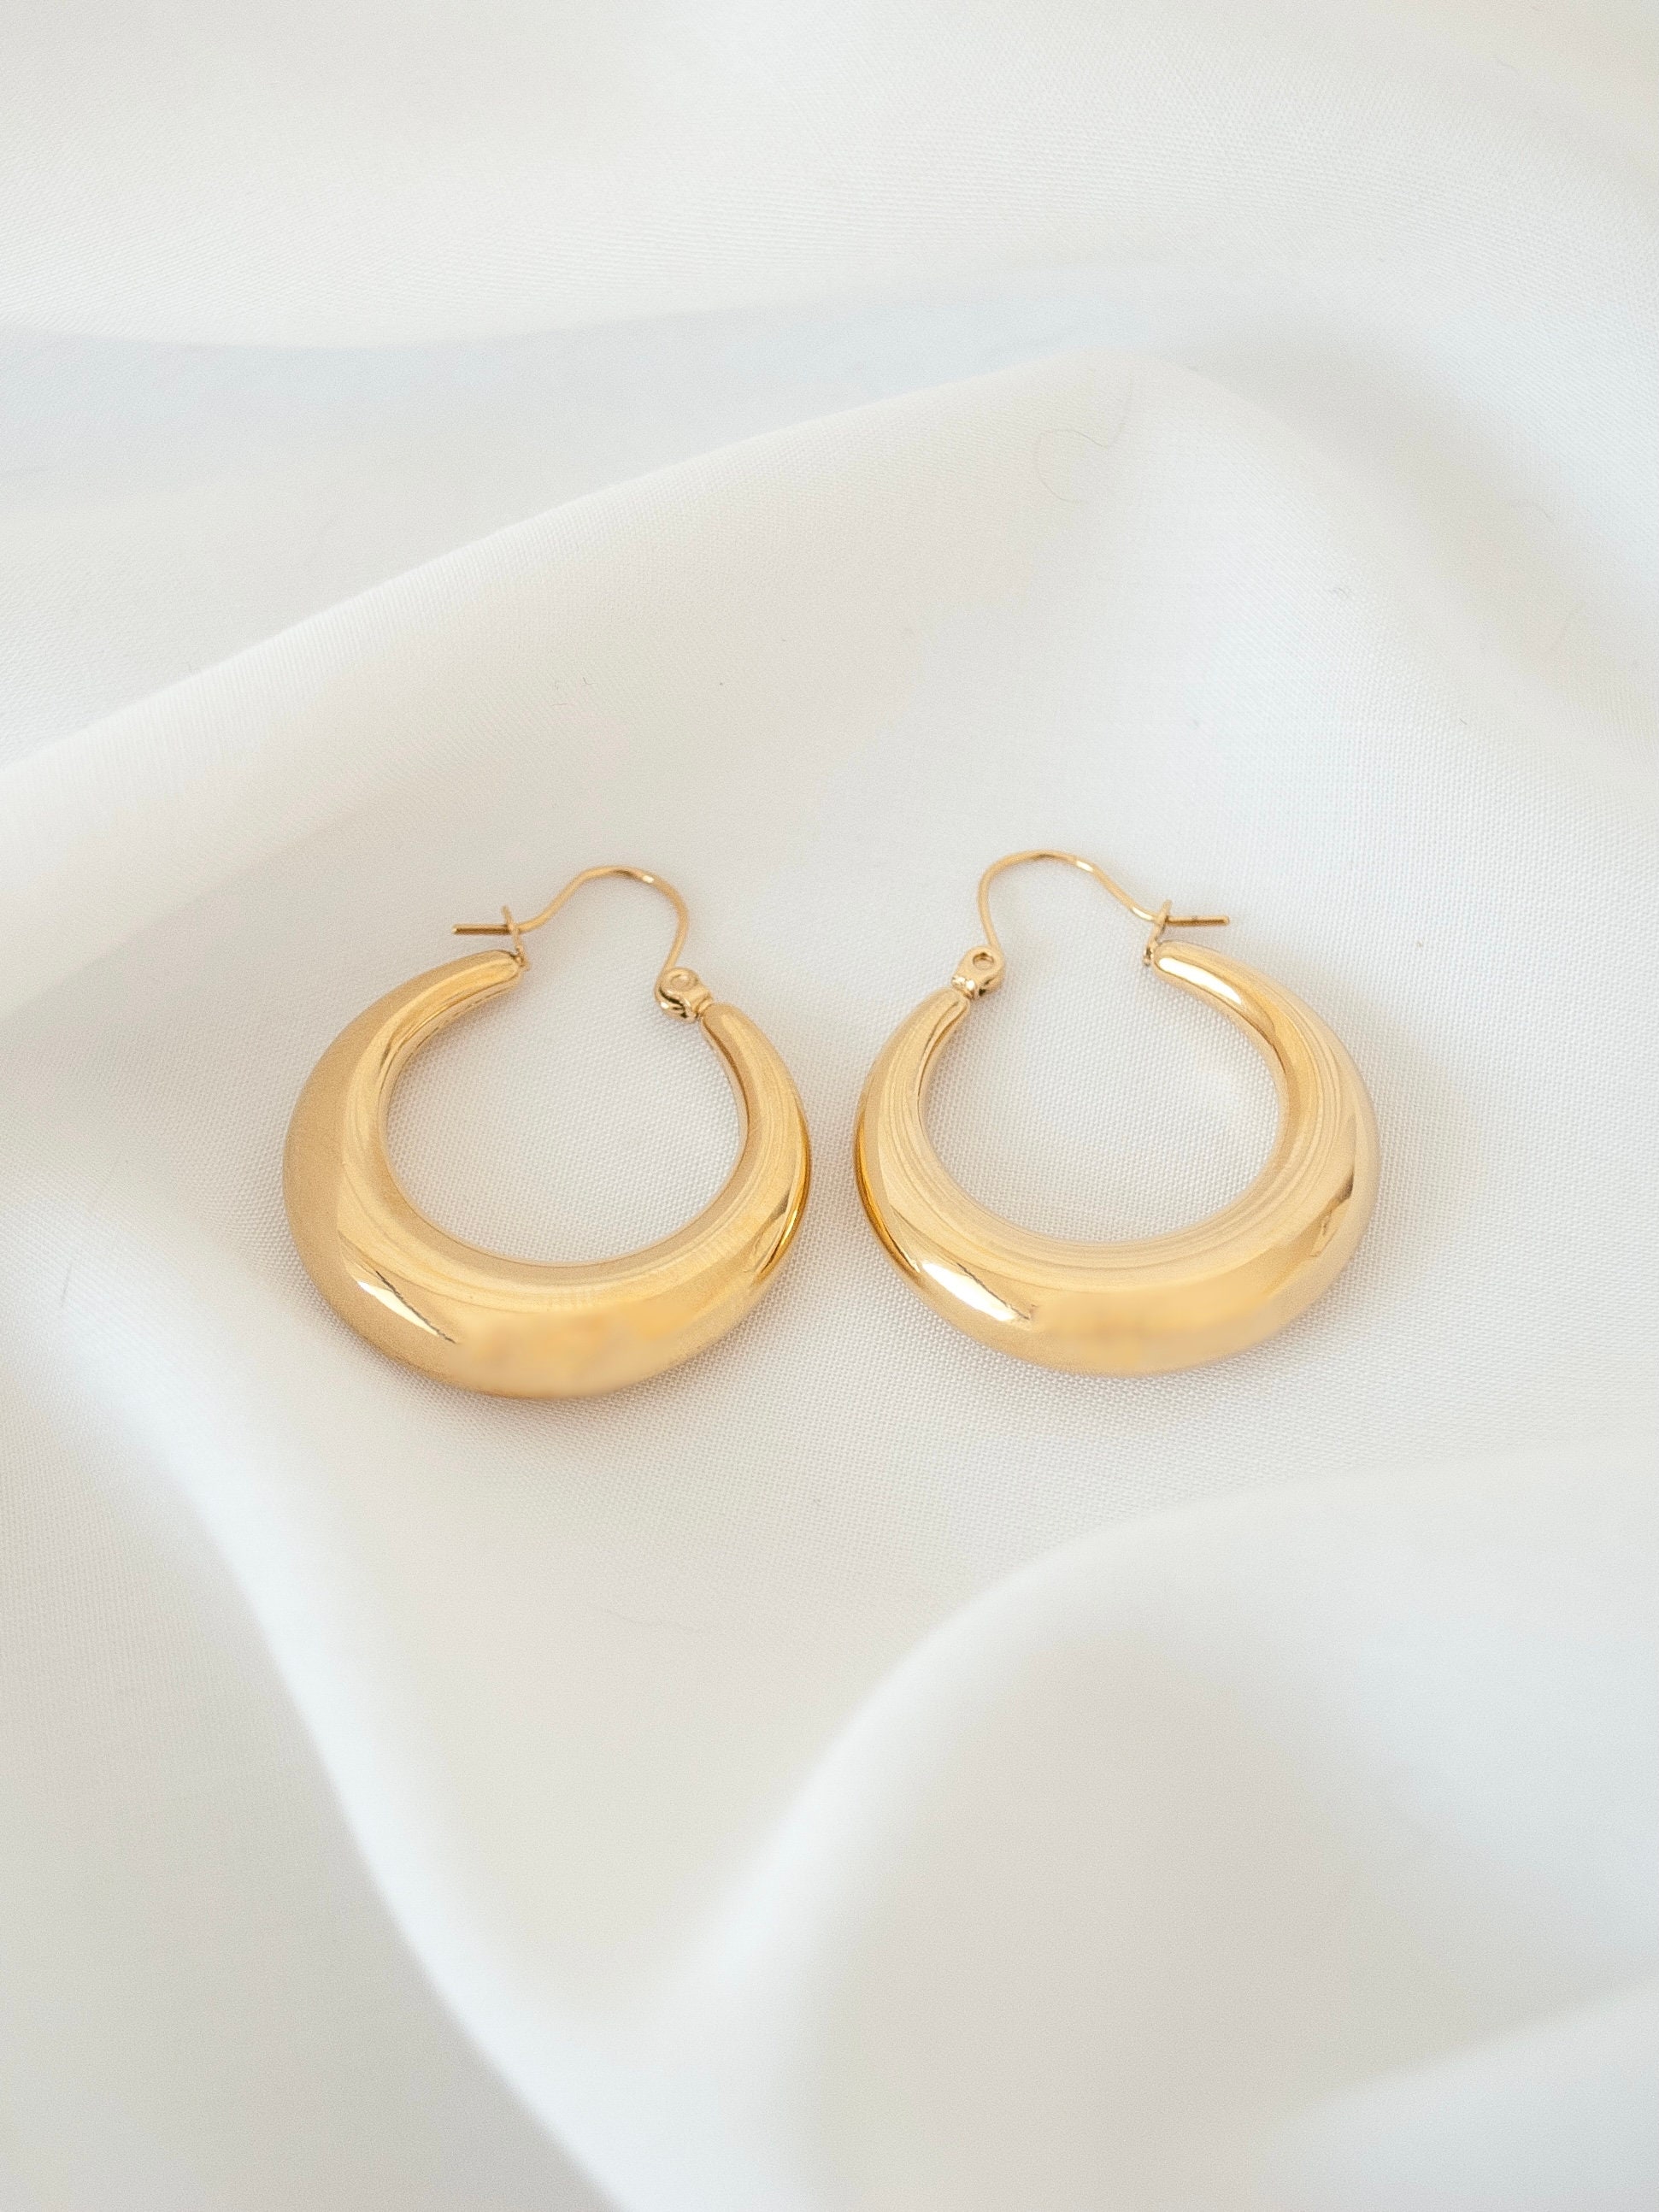 18ct 18K Gold Plated Clear Crystal Huggie Hoop Earrings  UK Gift Idea   eBay